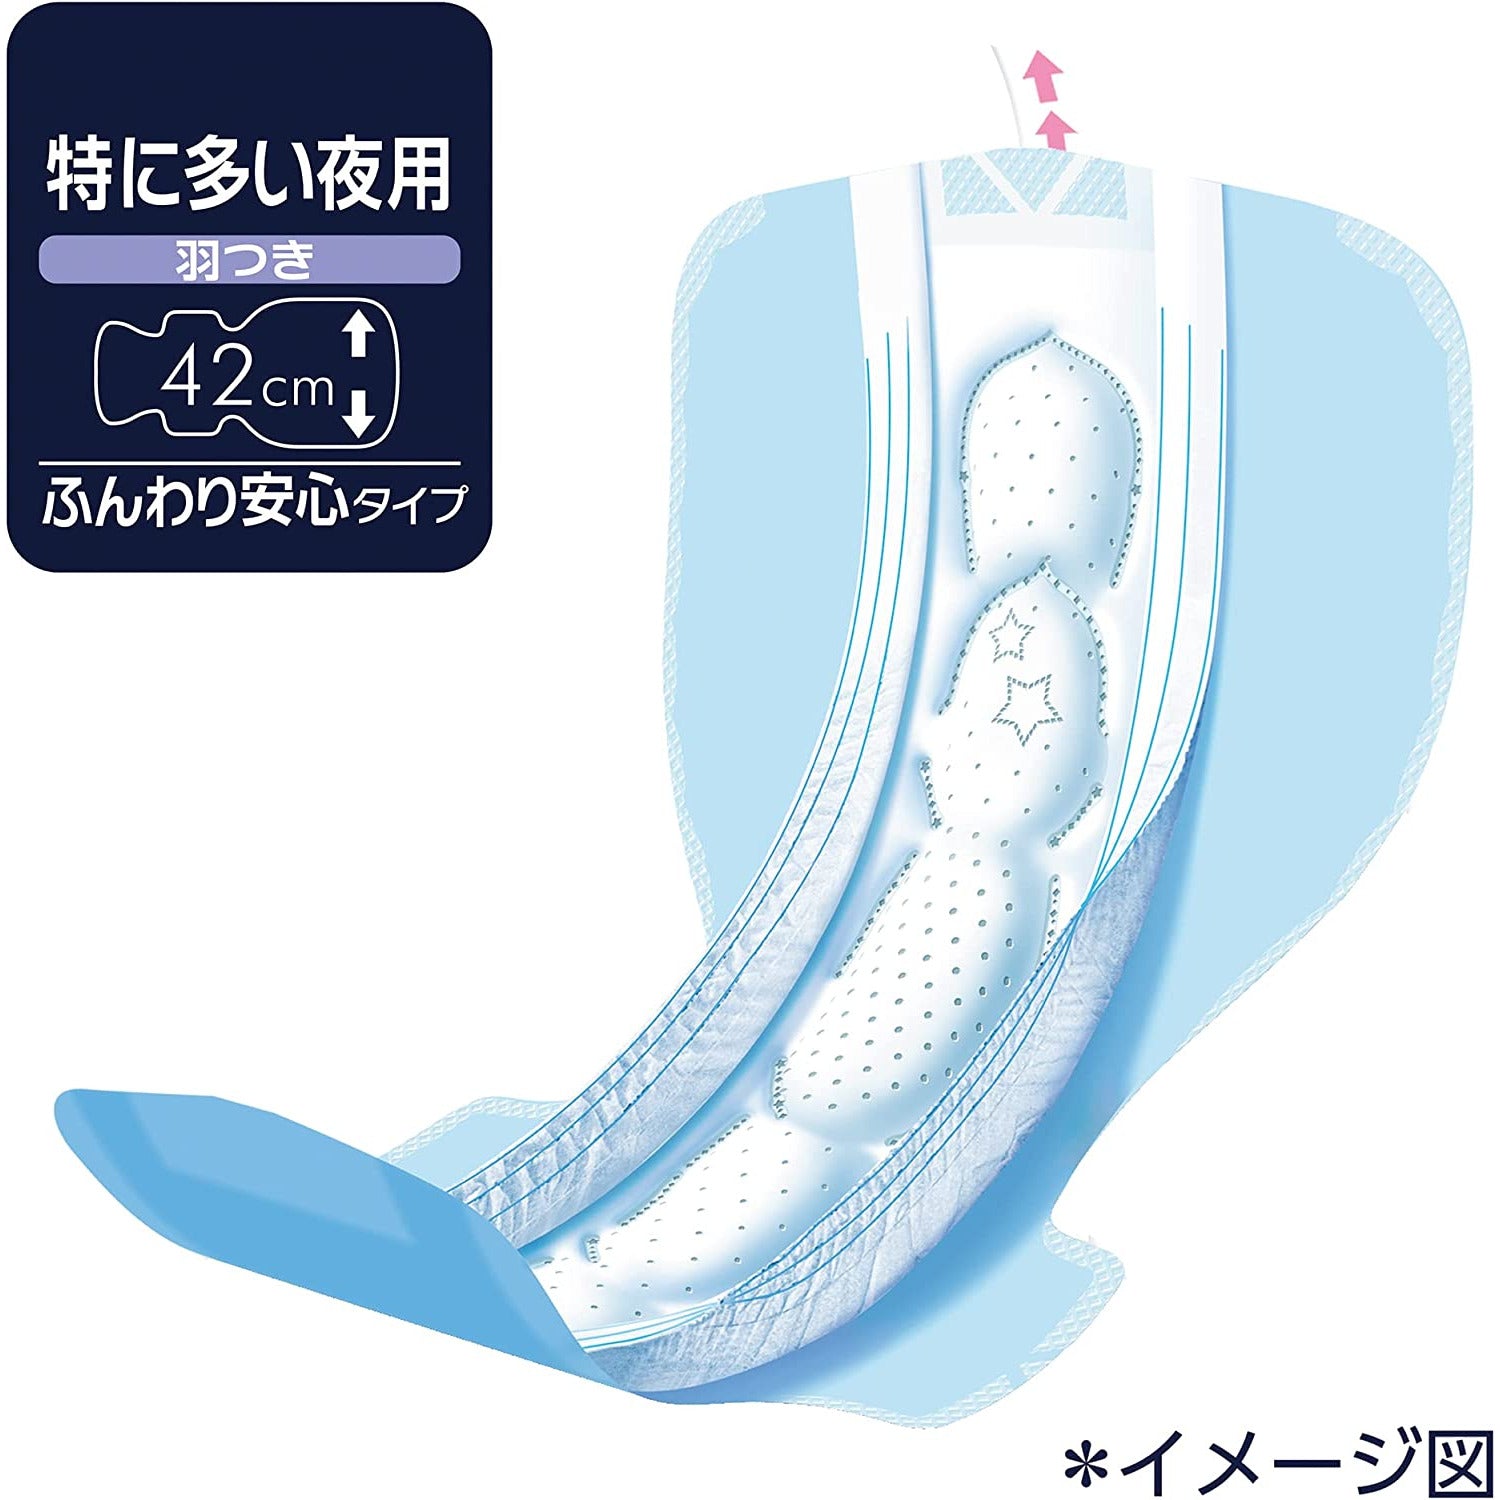 Unicharm Sofy sanitary napkins Super sound sleep wide G with wings 42cm 10 sheets